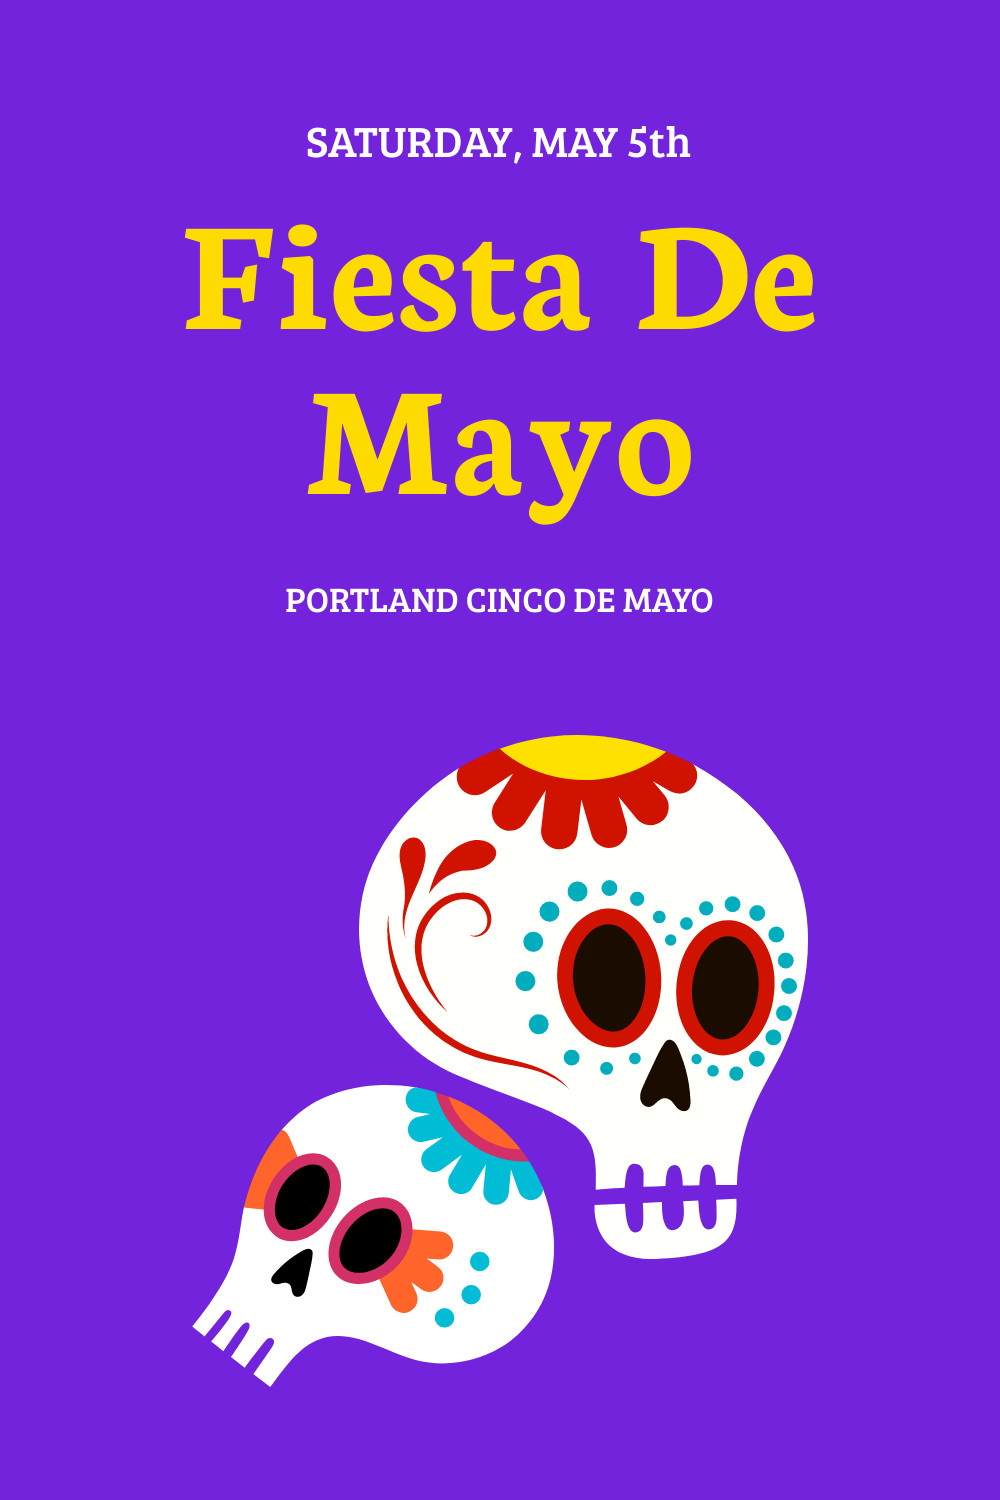 Portland Cinco de Mayo Festival Facebook Cover 820x360